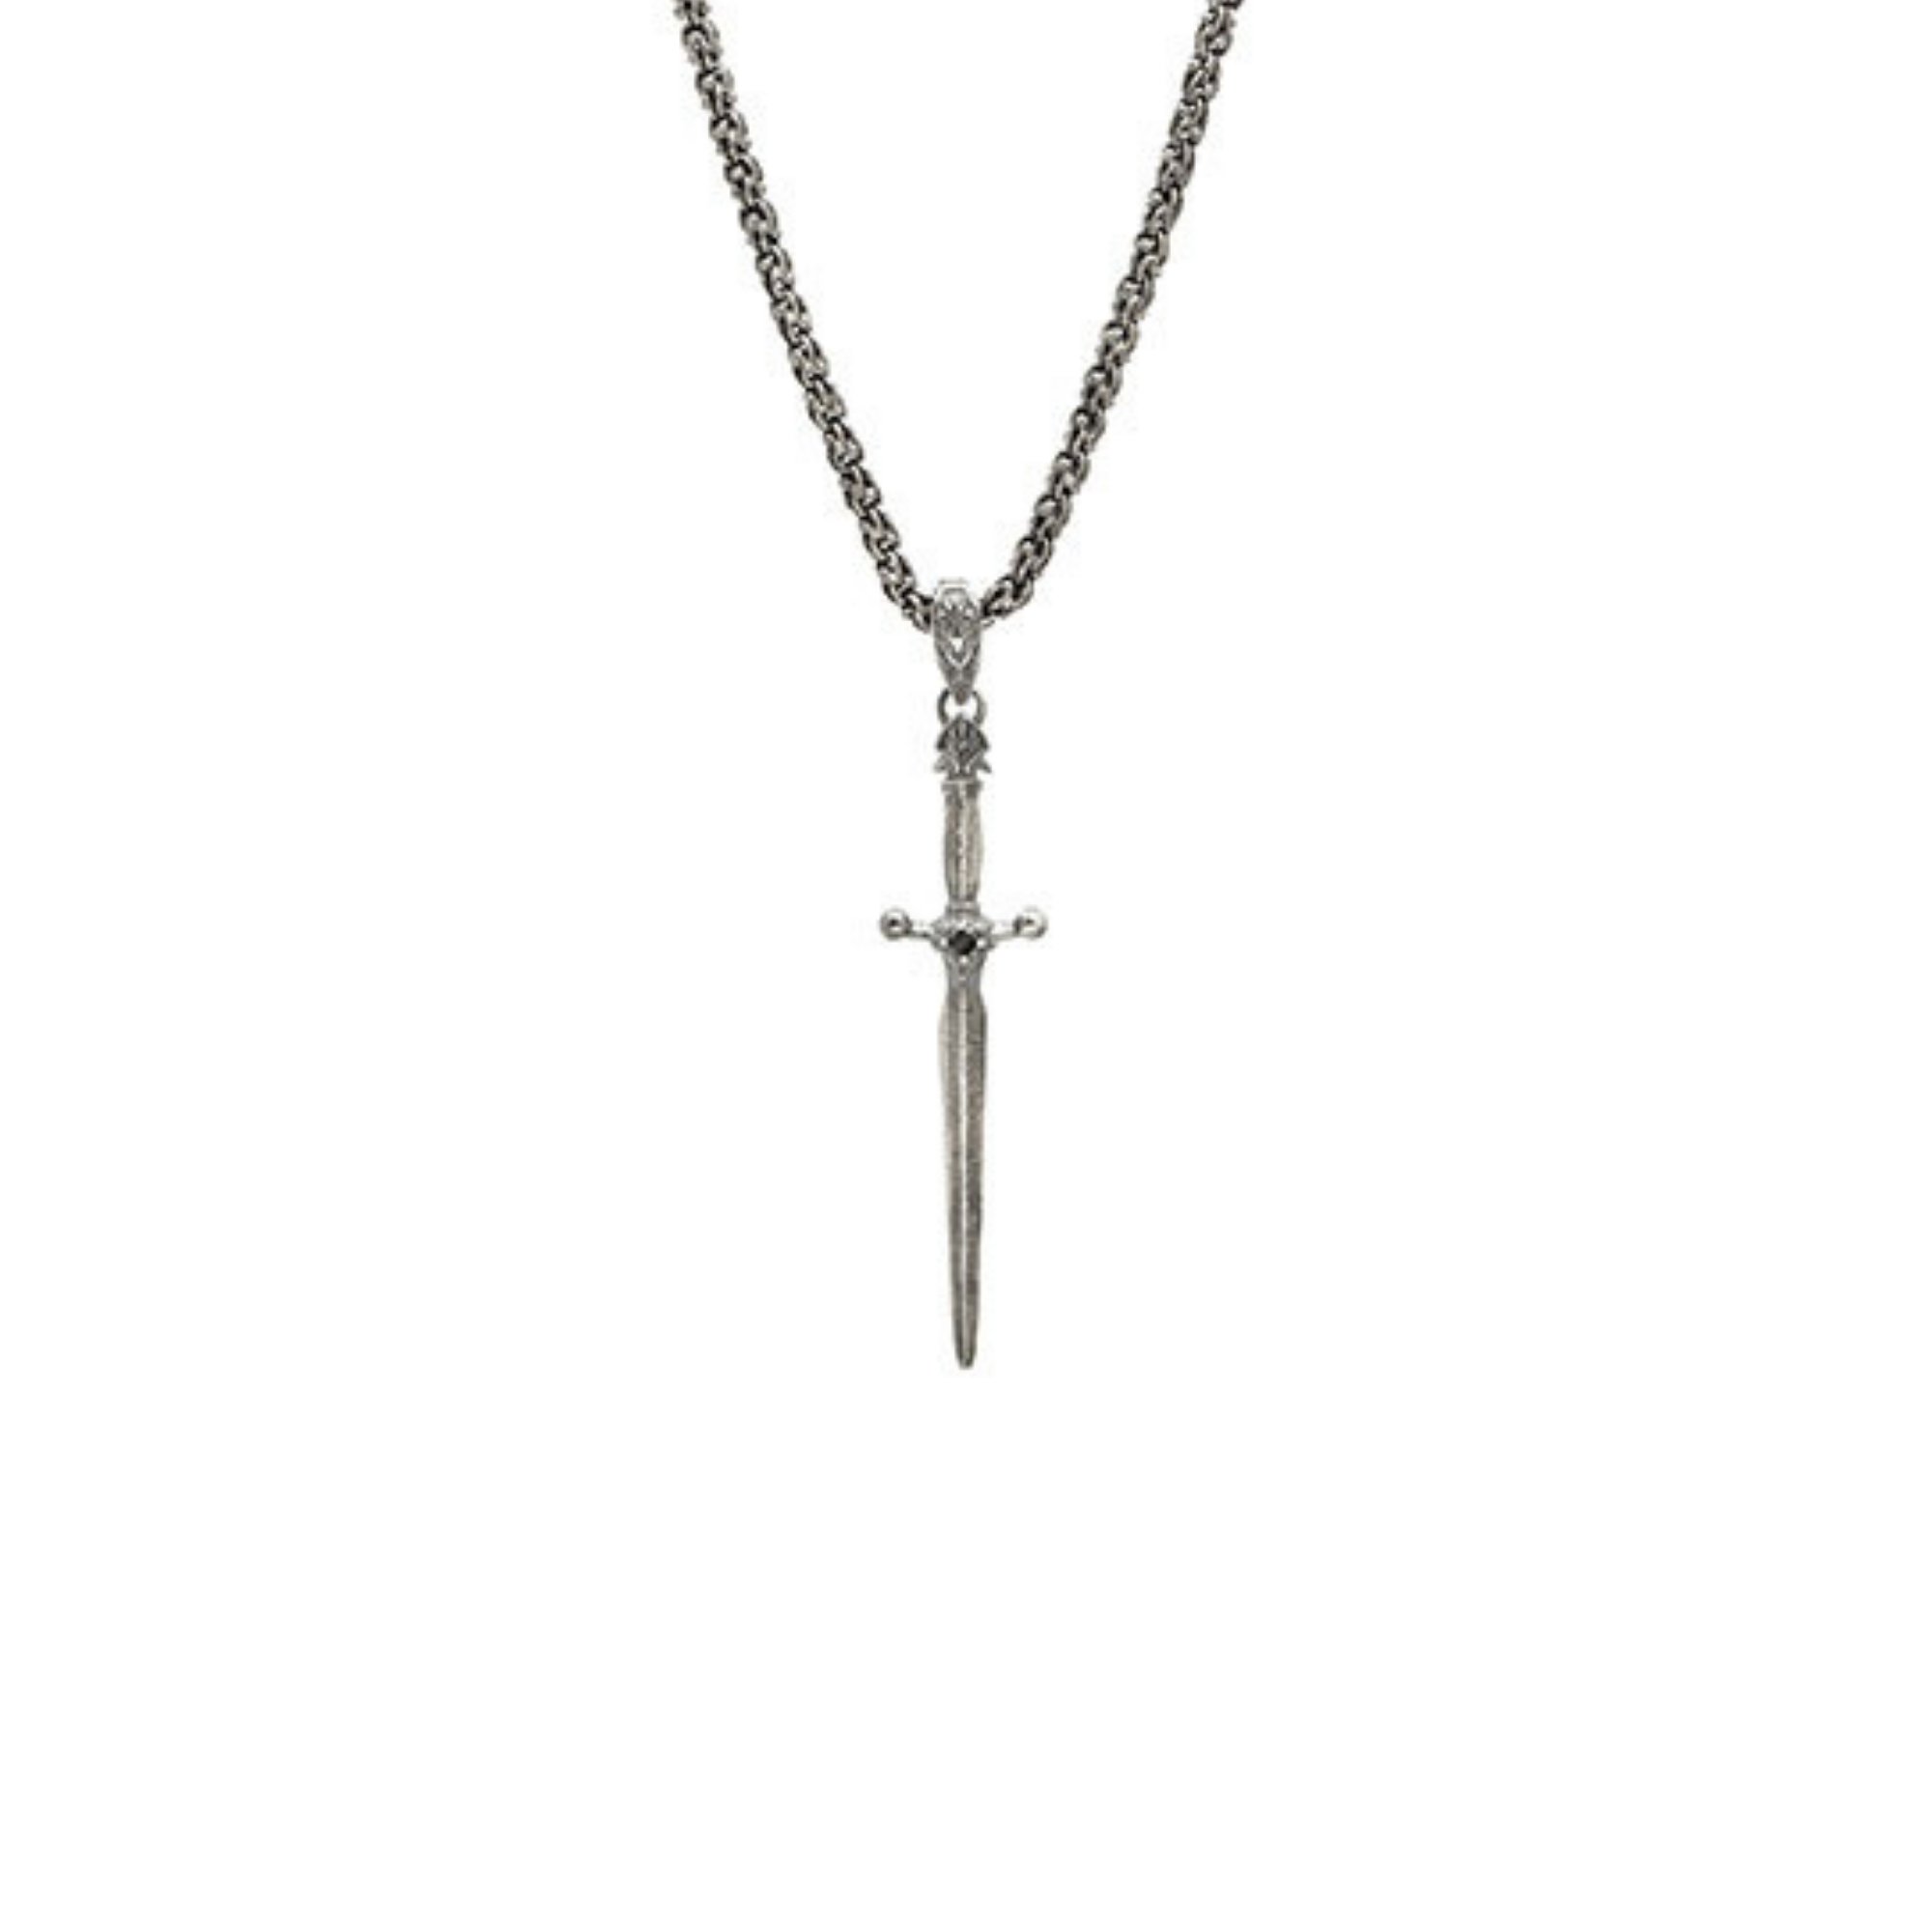 John Varvatos silver and black diamond “Skulls &amp; Daggers” pendant necklace, $858 at Bay Hill Jewelers